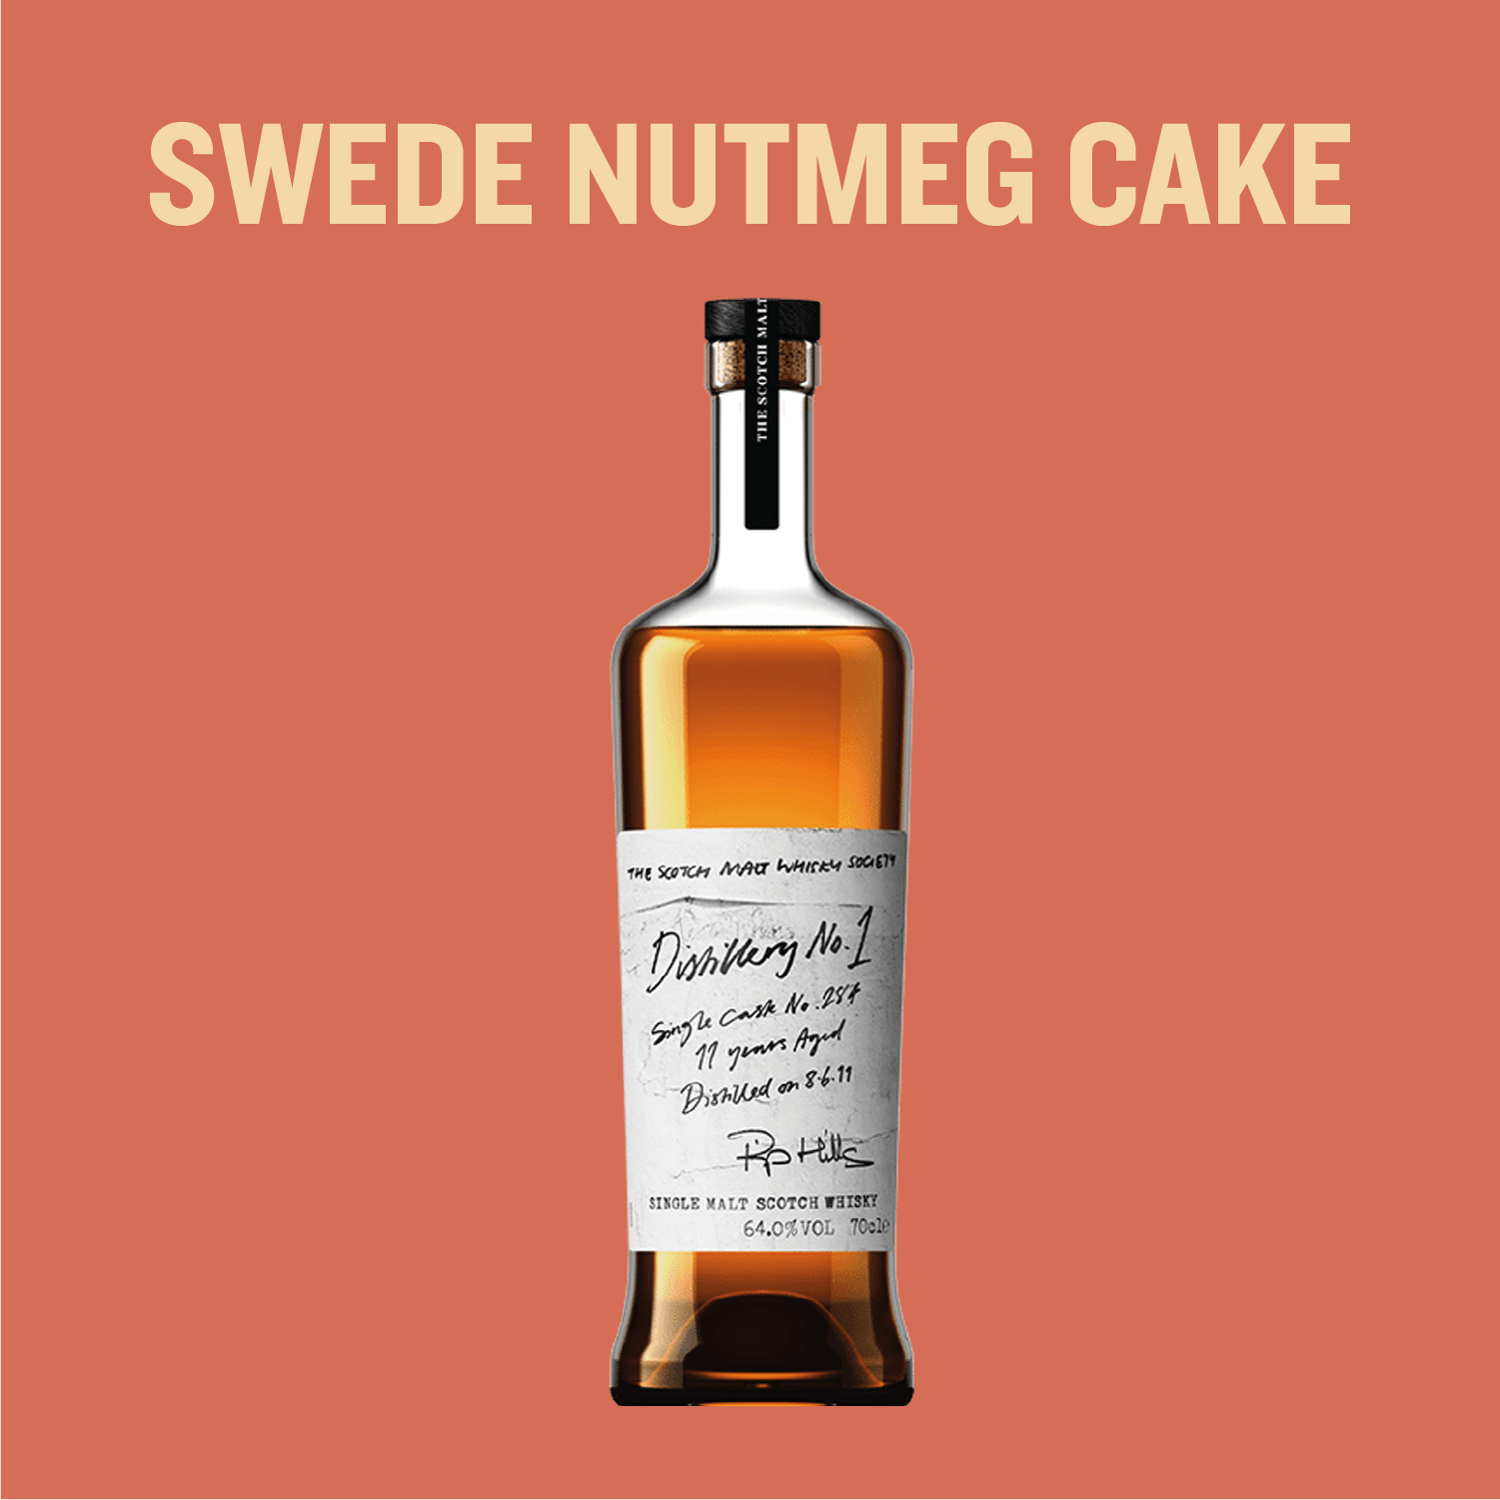 SWEDE NUTMEG CAKE